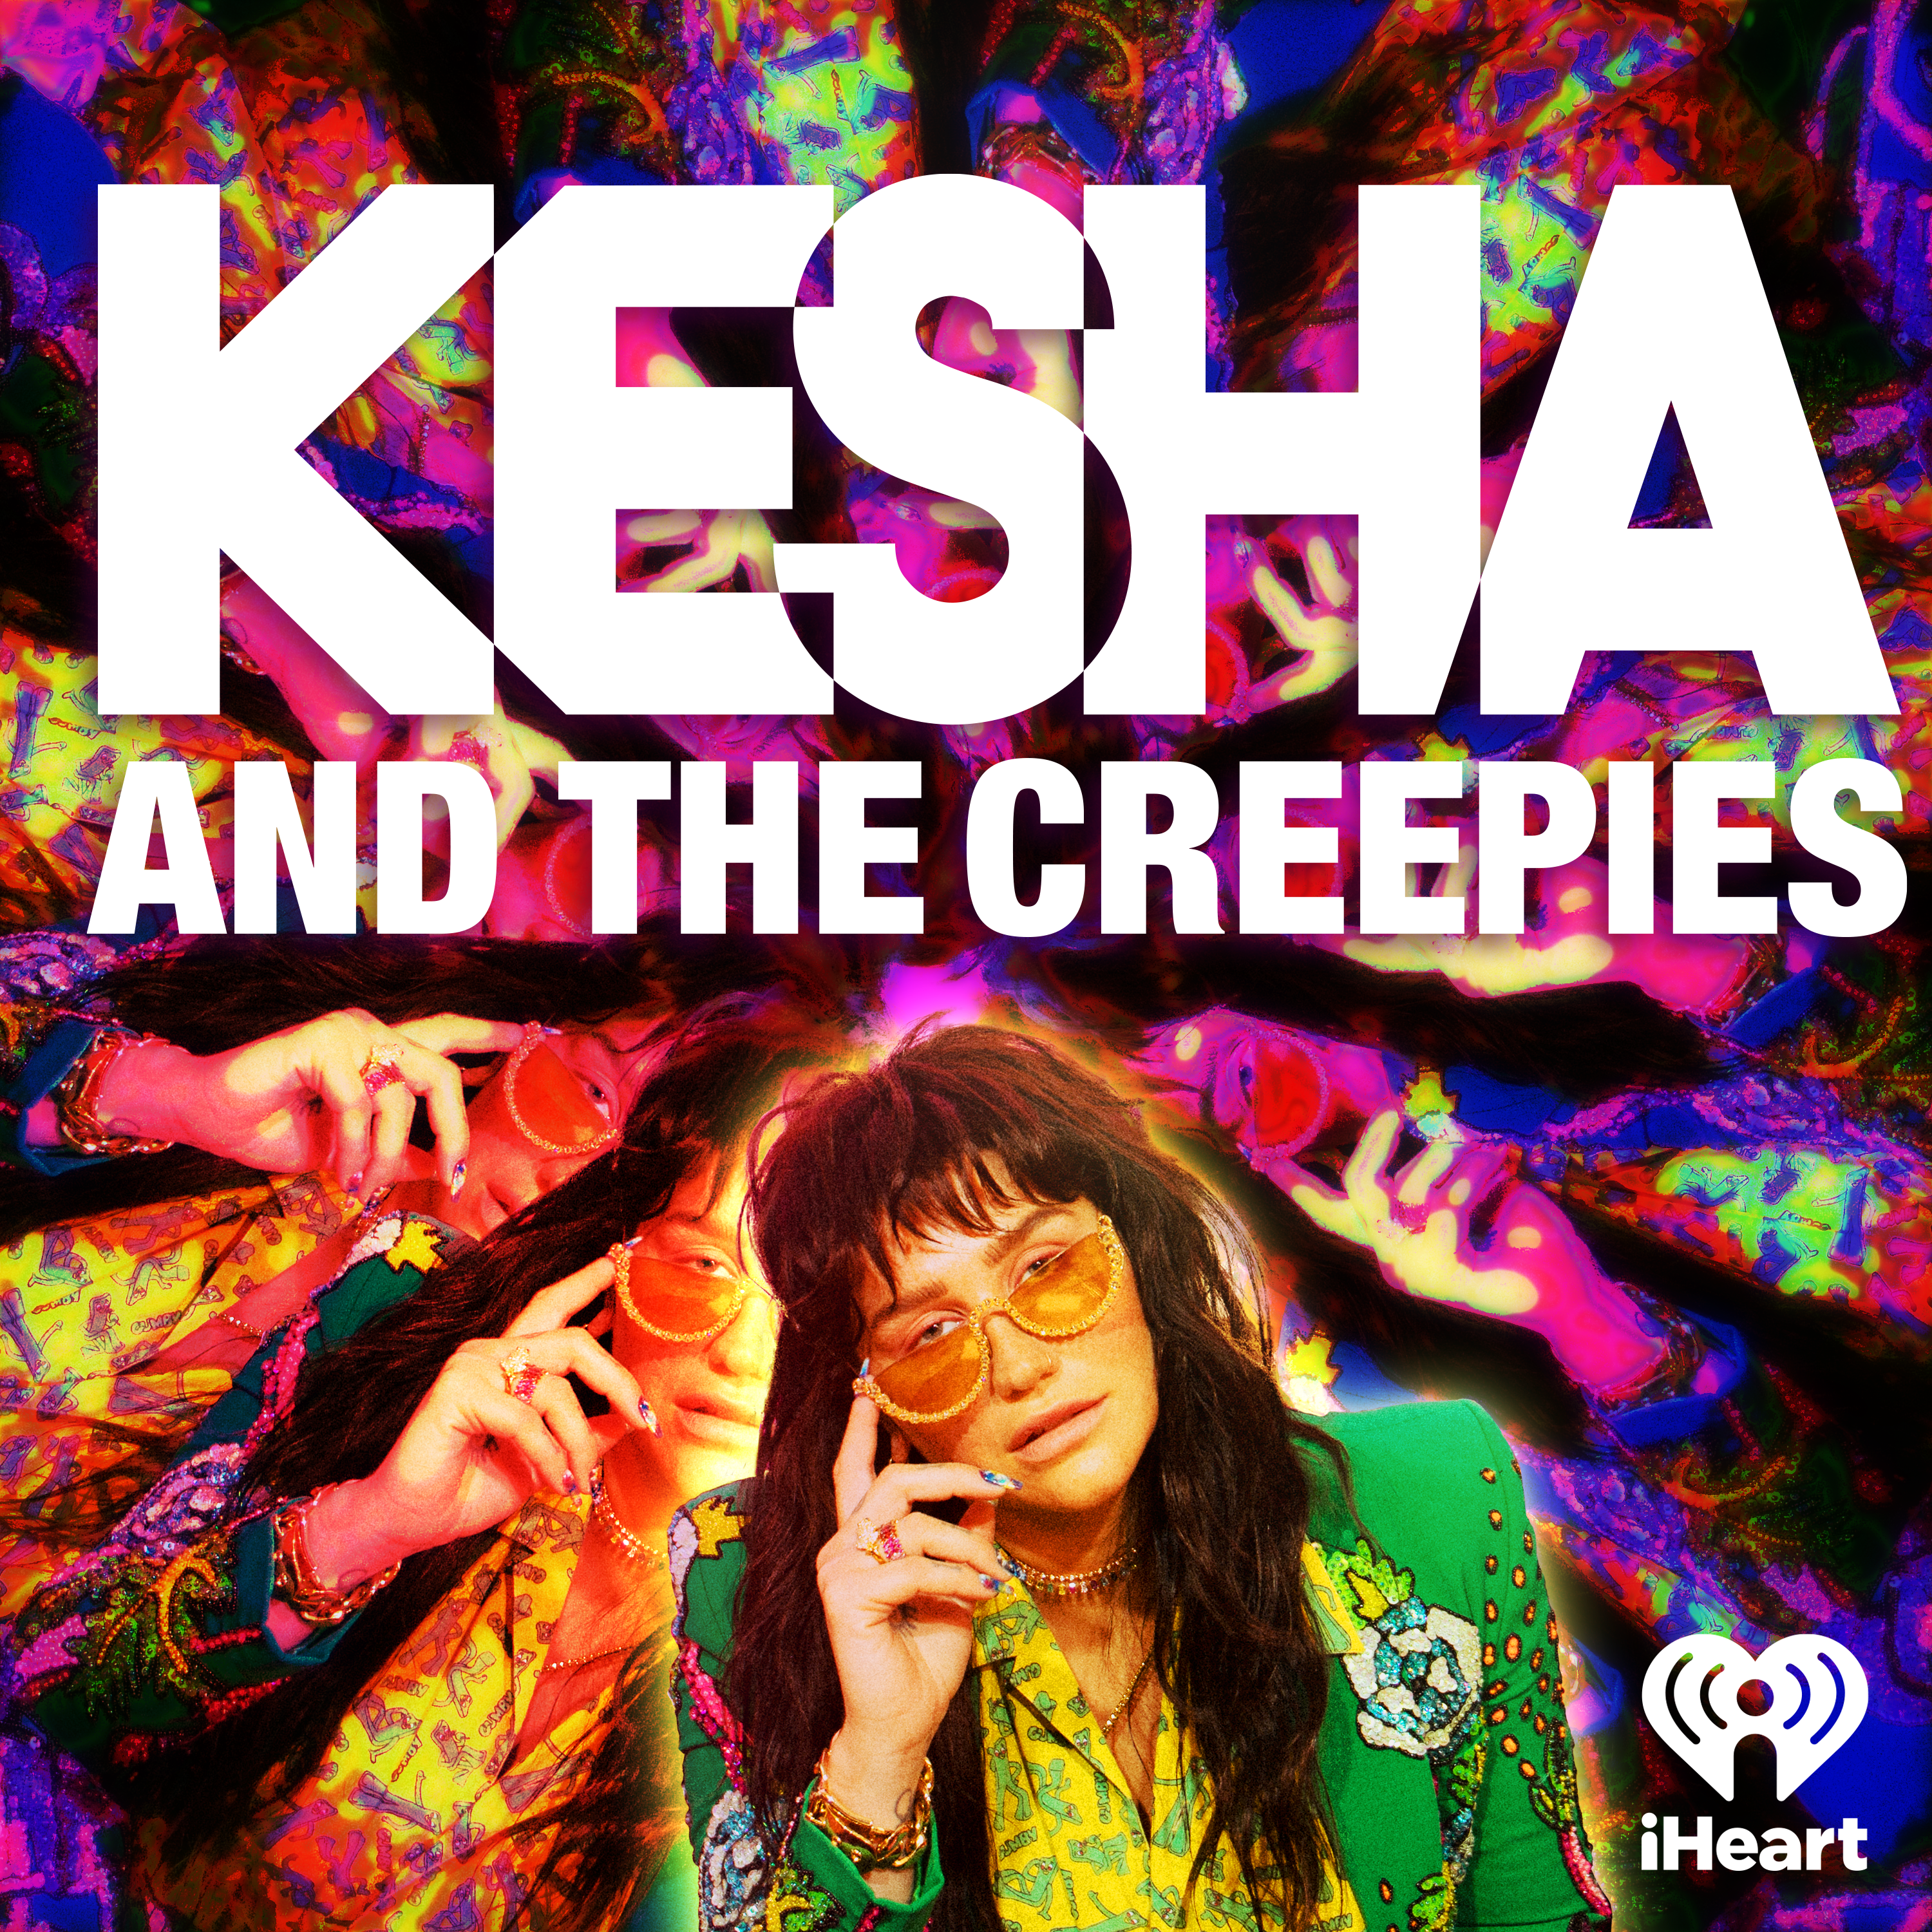 Introducing: Kesha and the Creepies